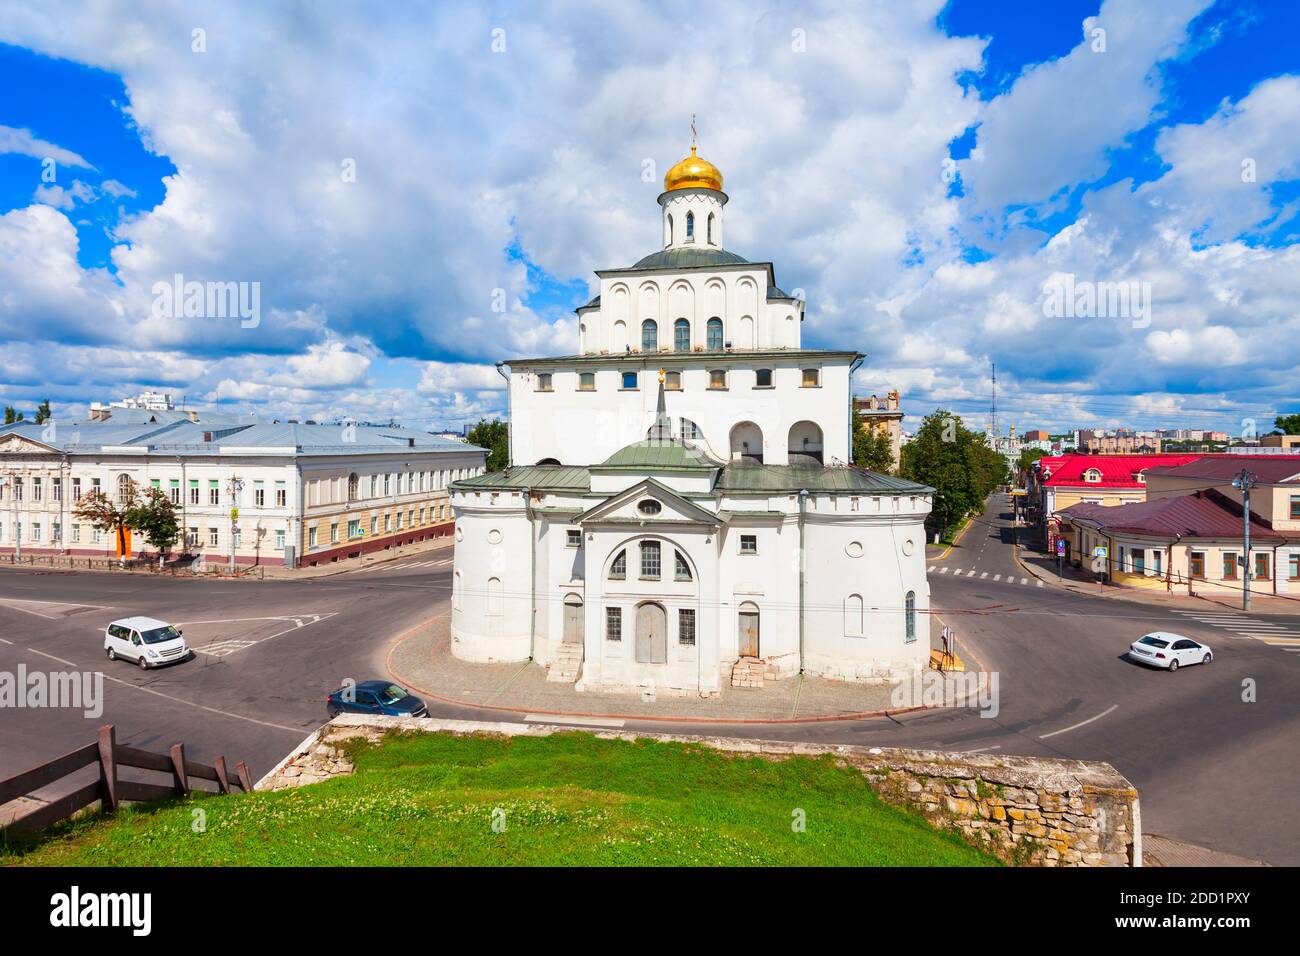 Image of Russia, Golden Ring, Vladimir, Cathedral of Saint Demetrius